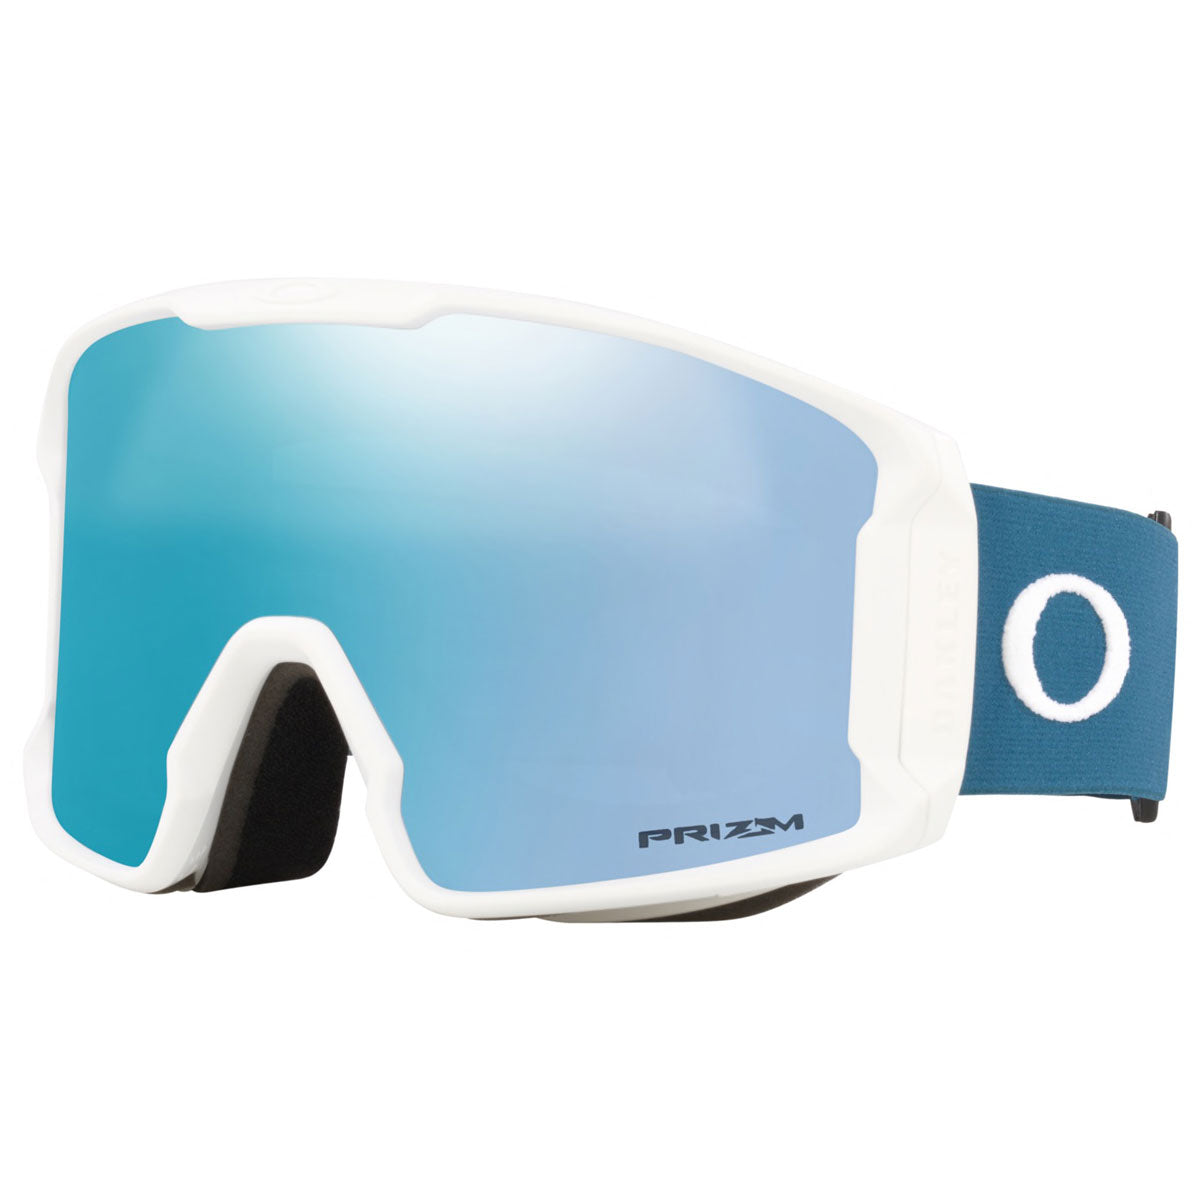 Oakley Line Miner L Snowboard Goggles - Posiden/Prizm Saphire - LG image 1